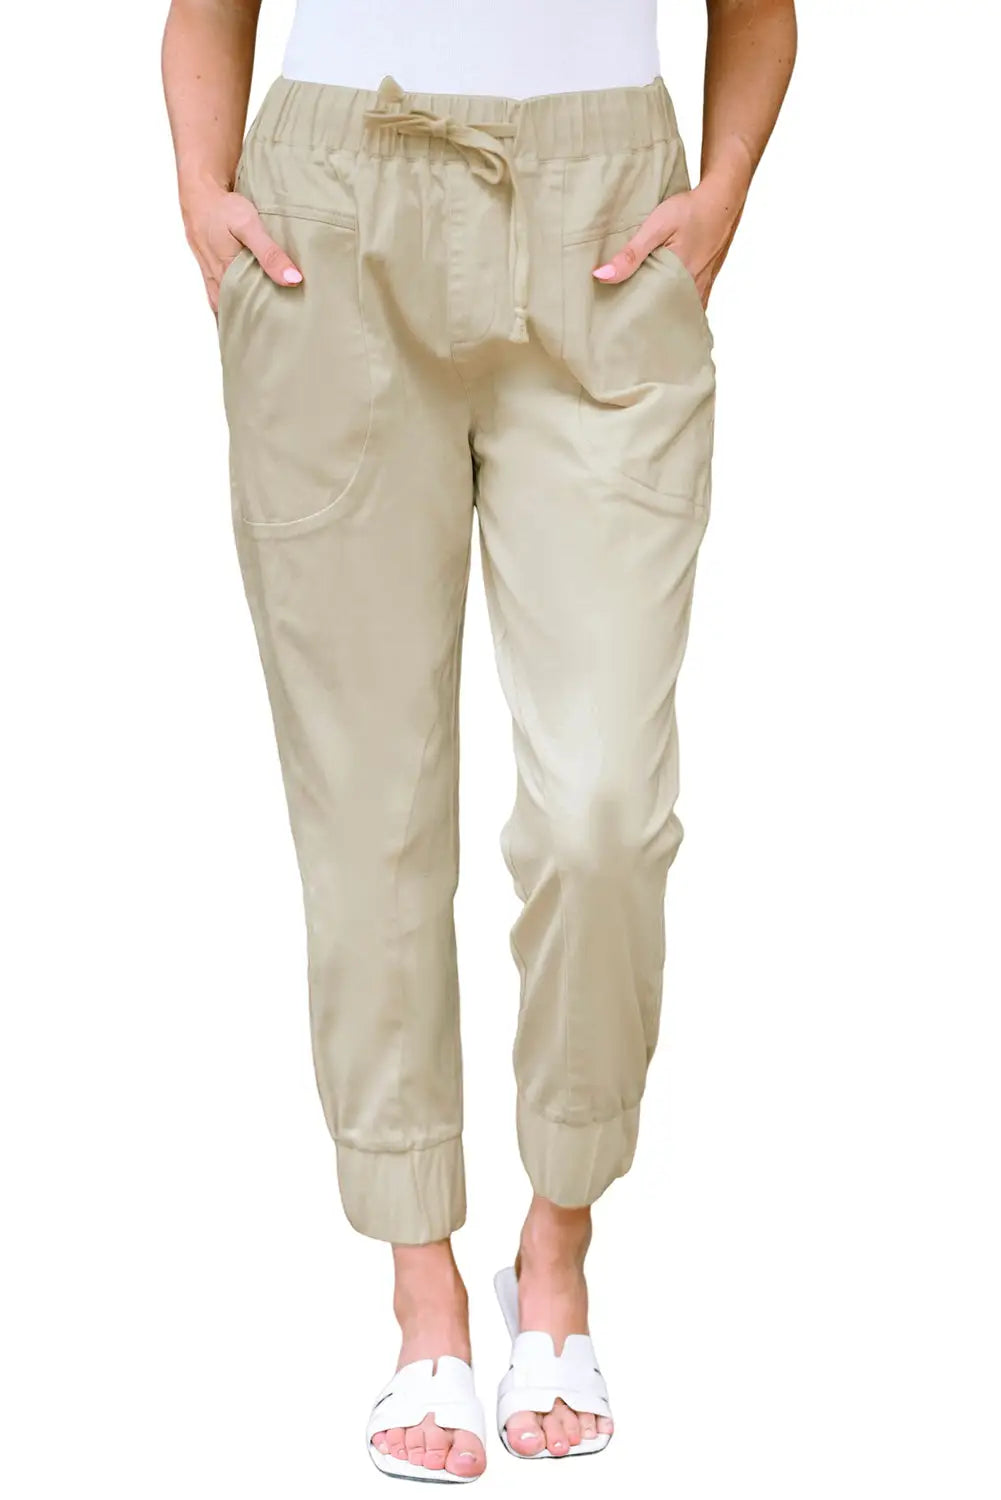 Apricot high waist drawstring pocketed pants - bottoms